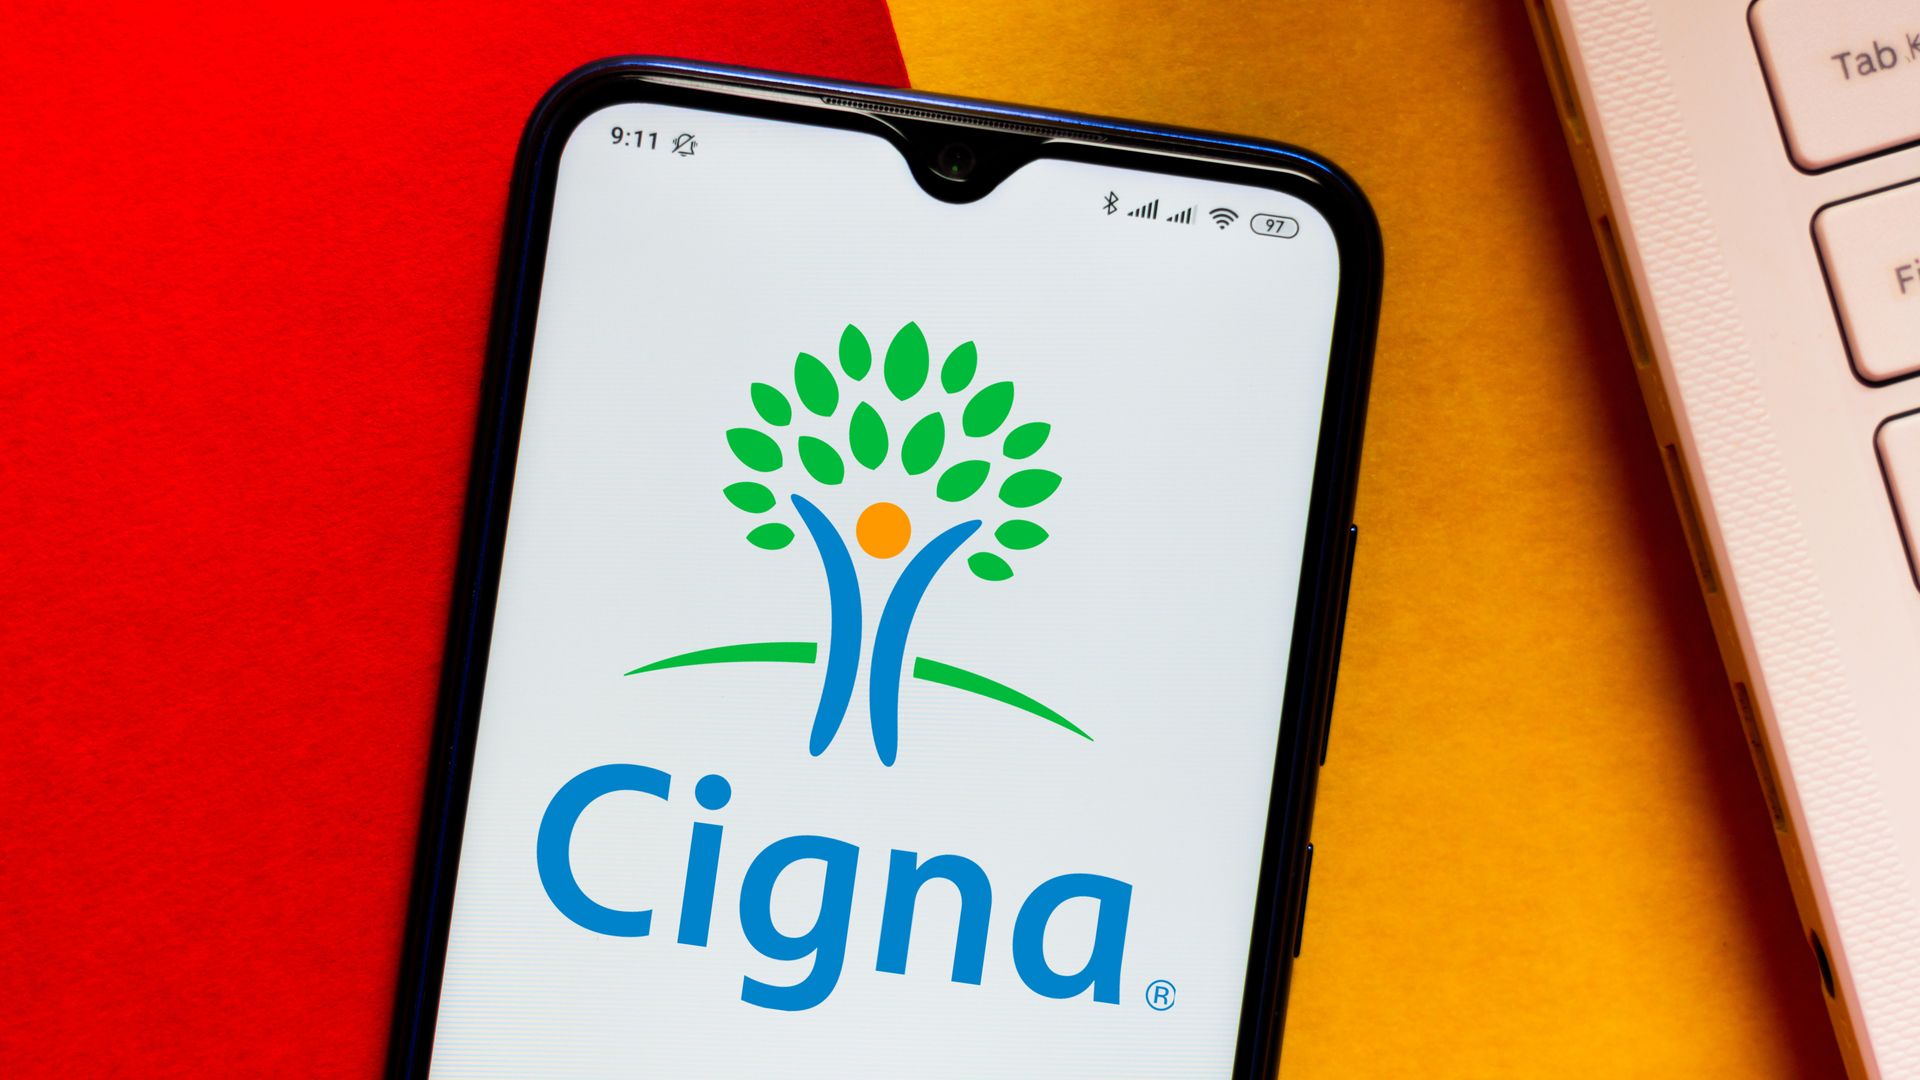 The Cigna logo on a smartphone.